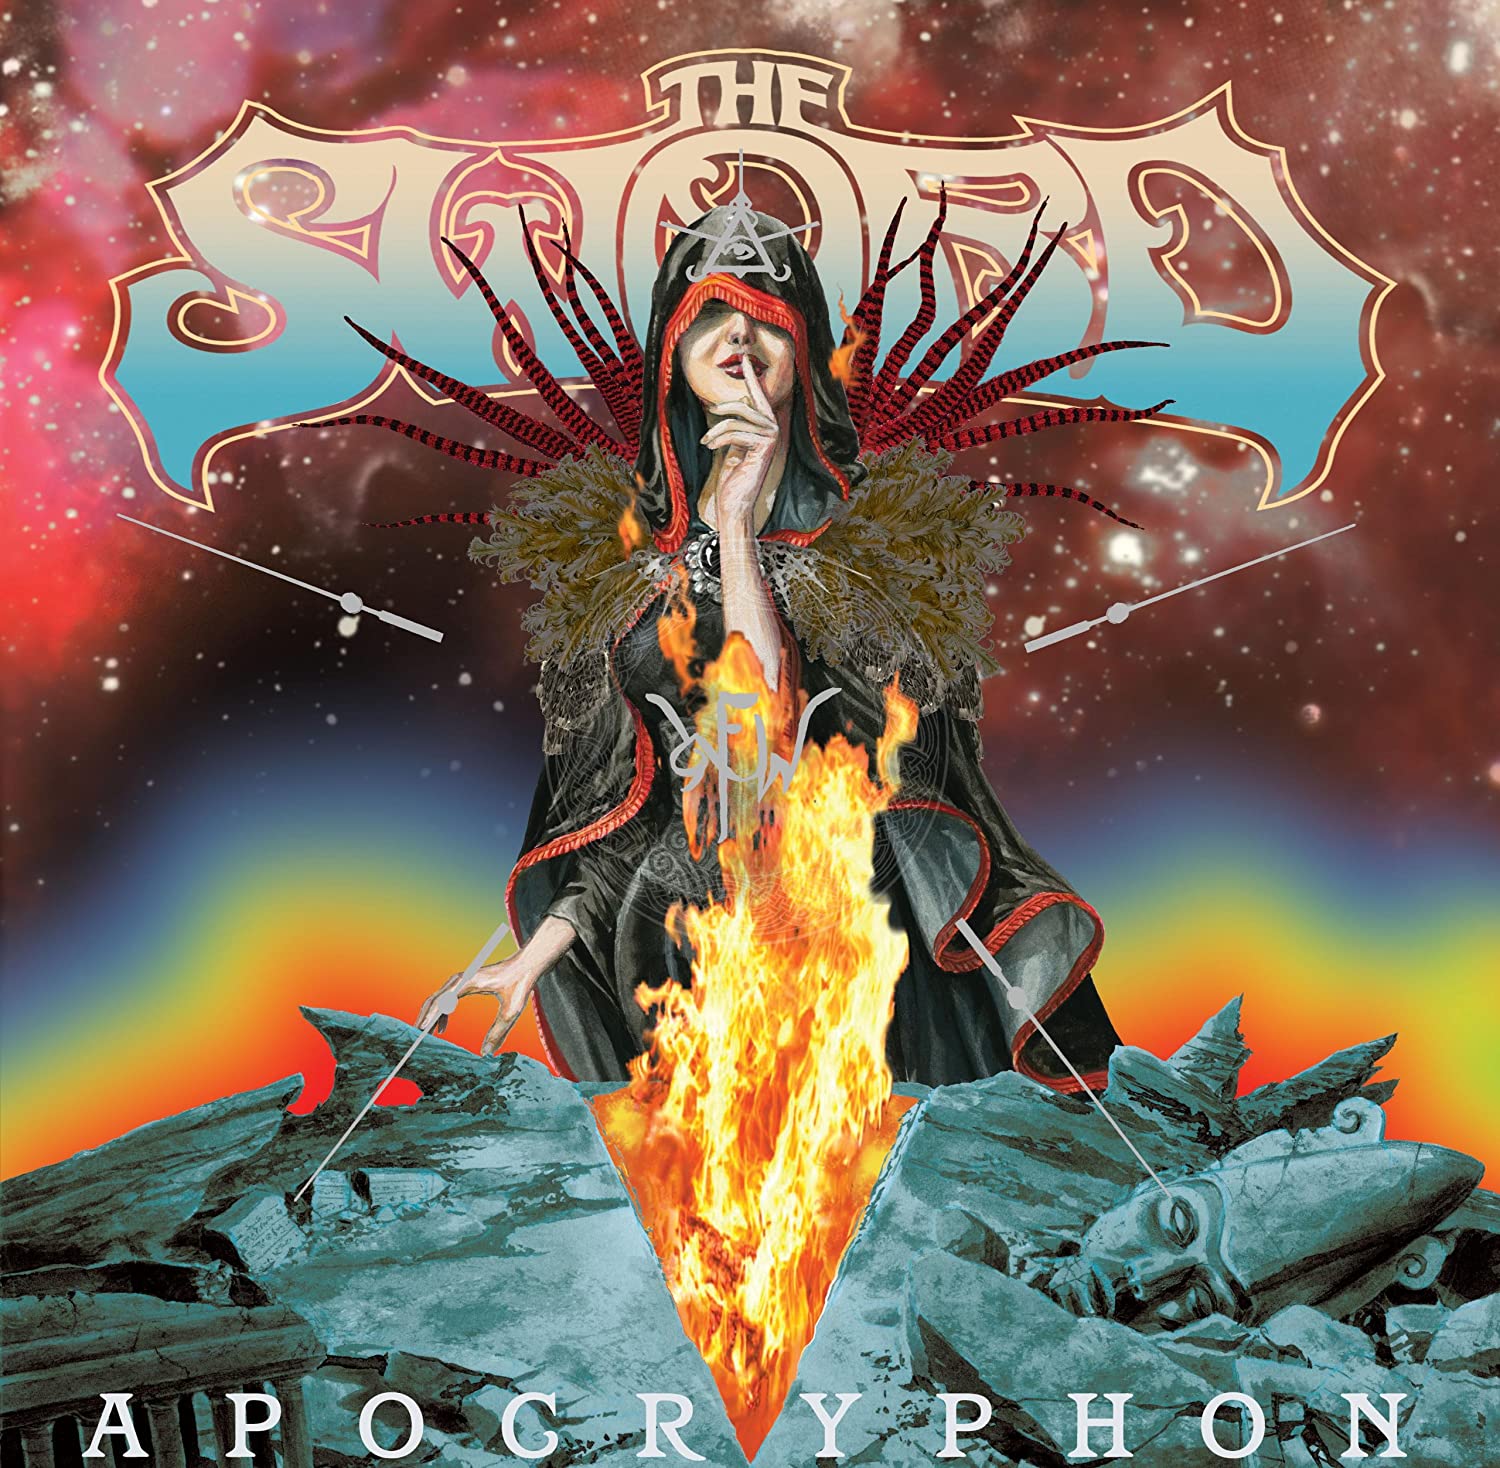 SWORD, THE - APOCRYPHON Vinyl LP